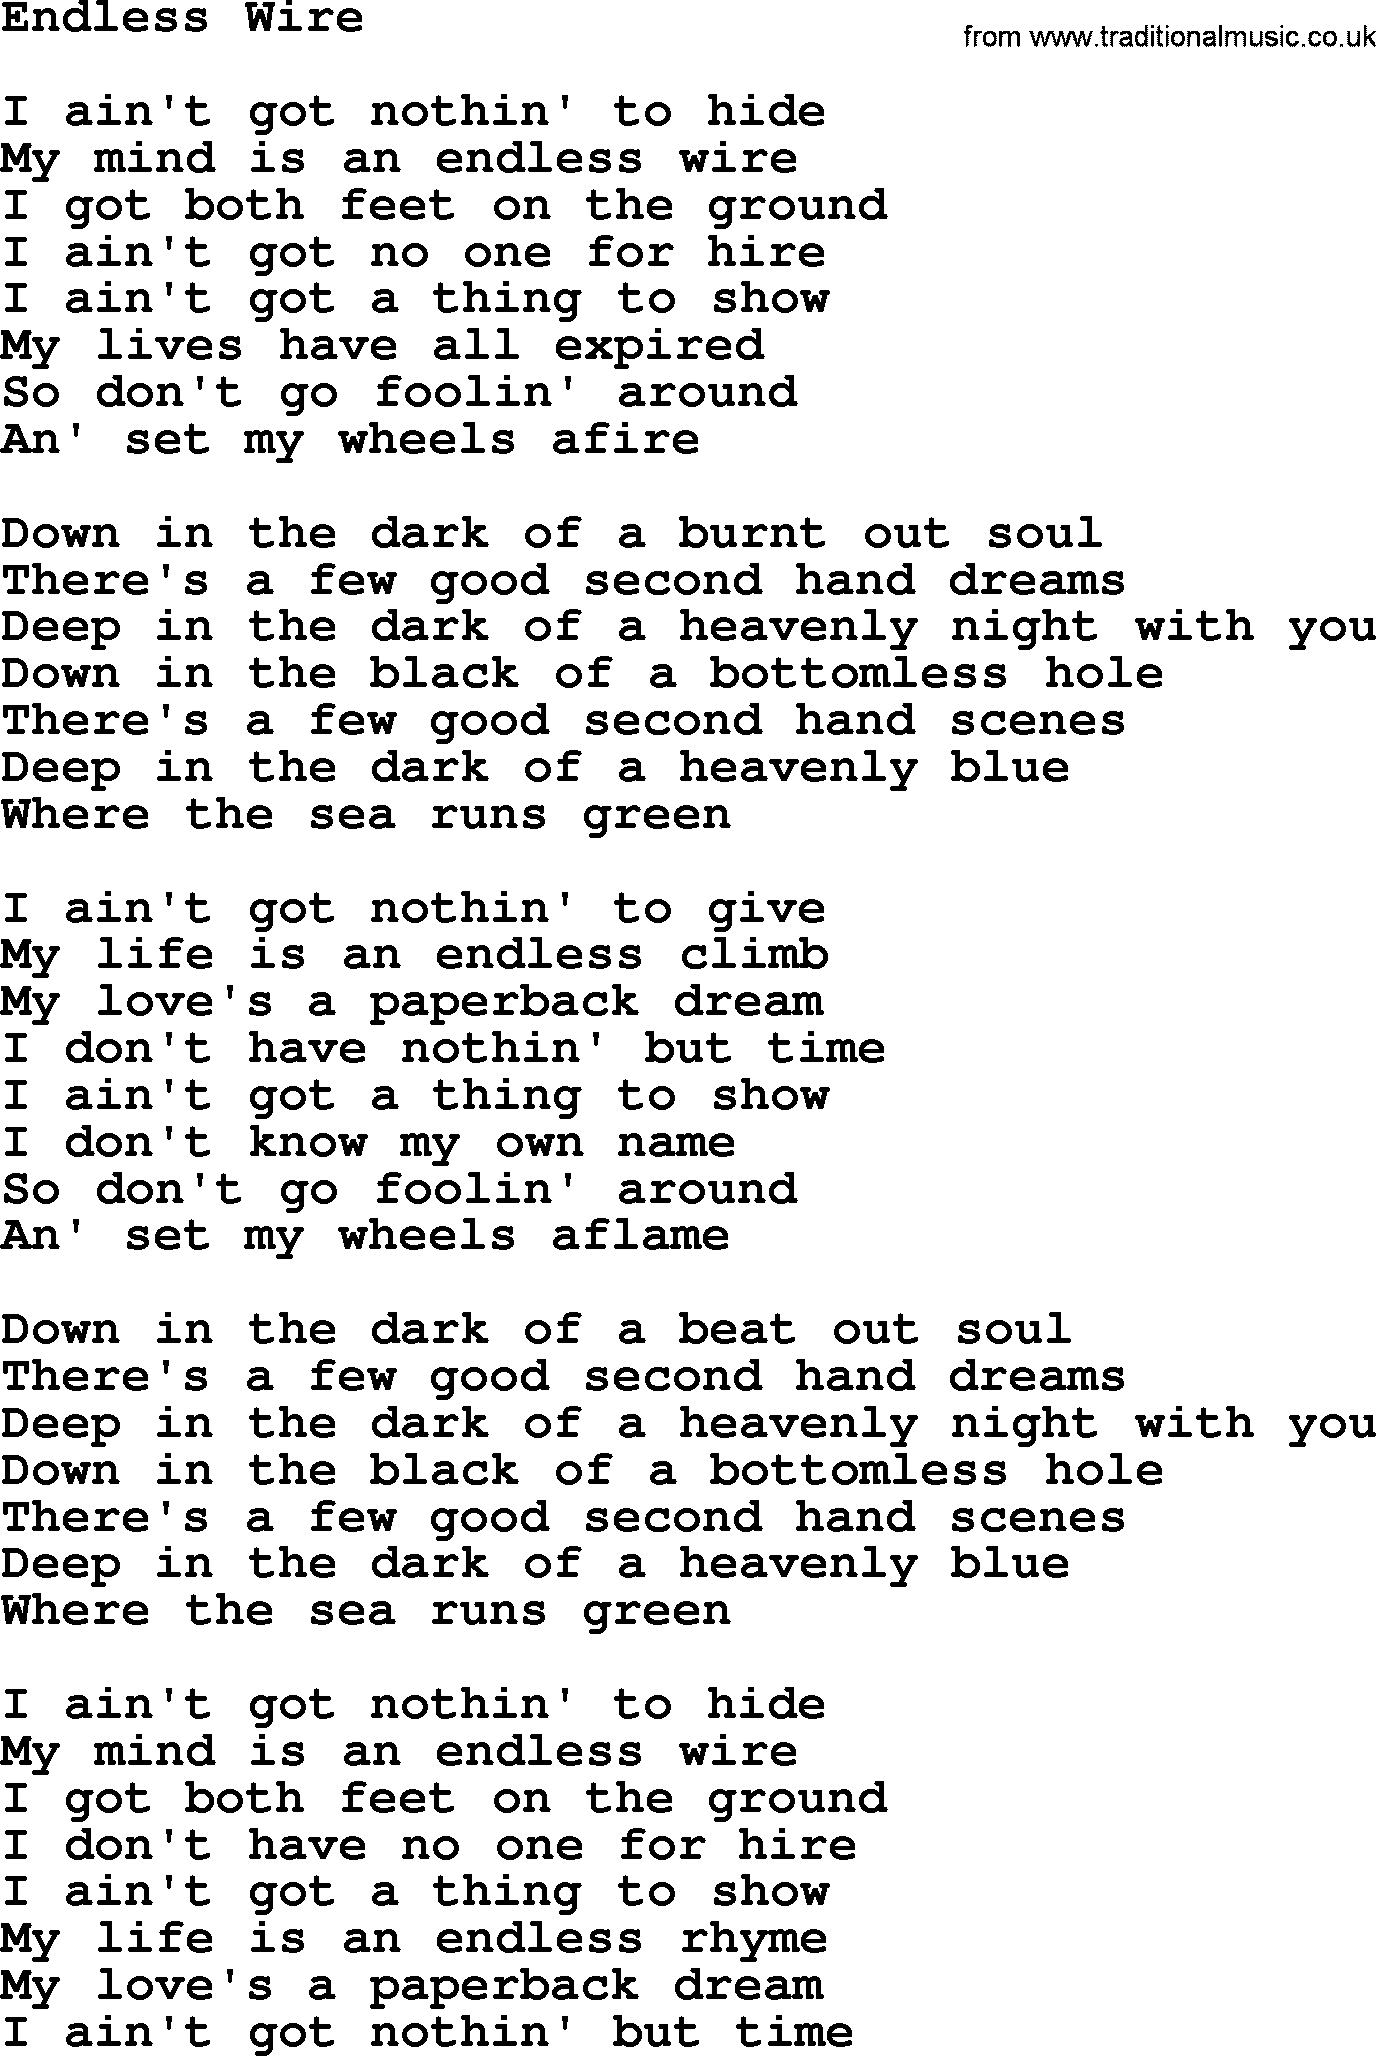 Gordon Lightfoot song Endless Wire, lyrics